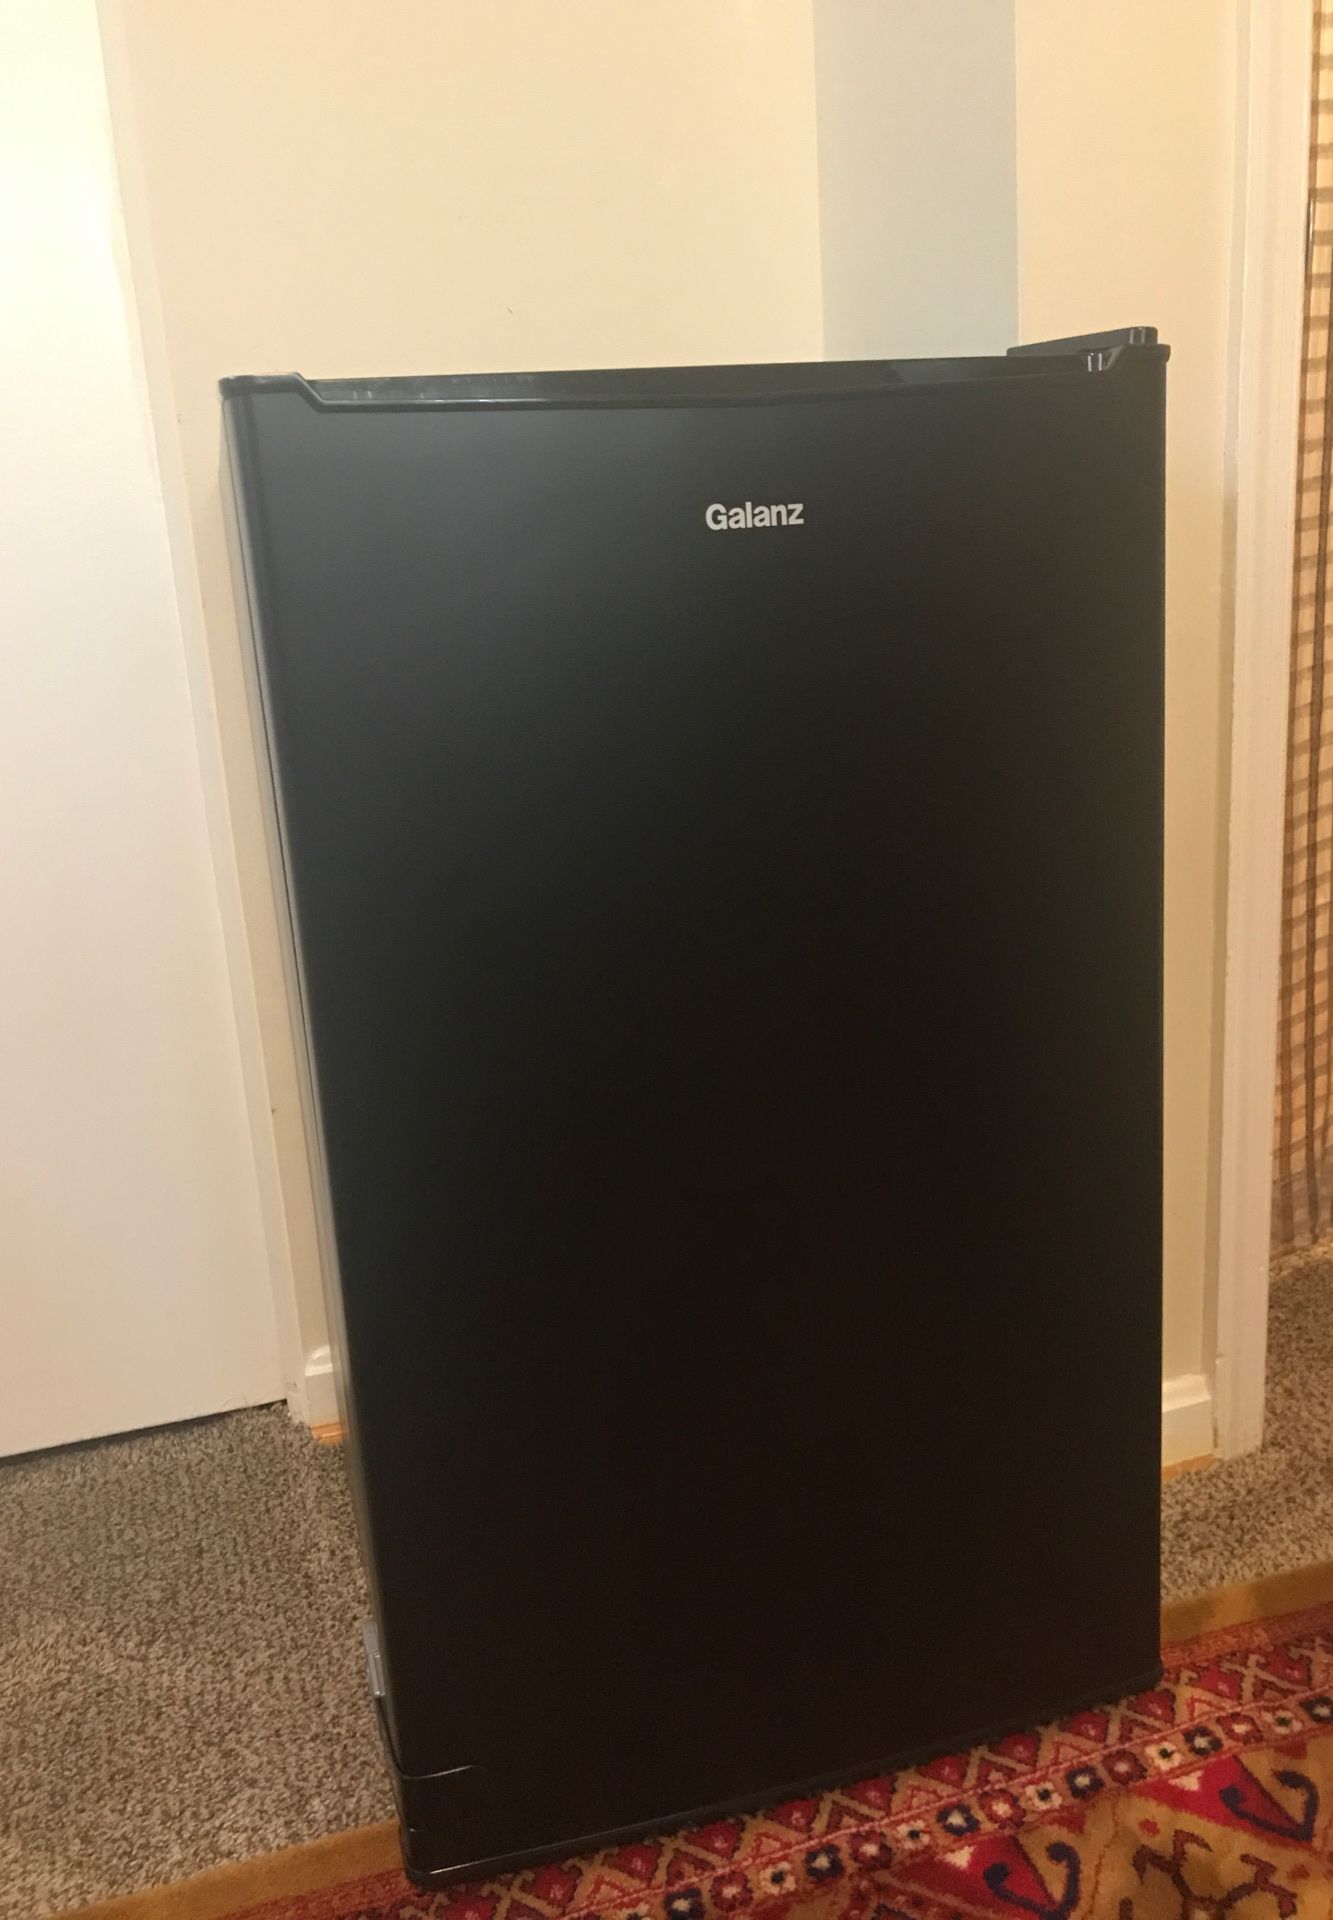 Galanz small refrigerator